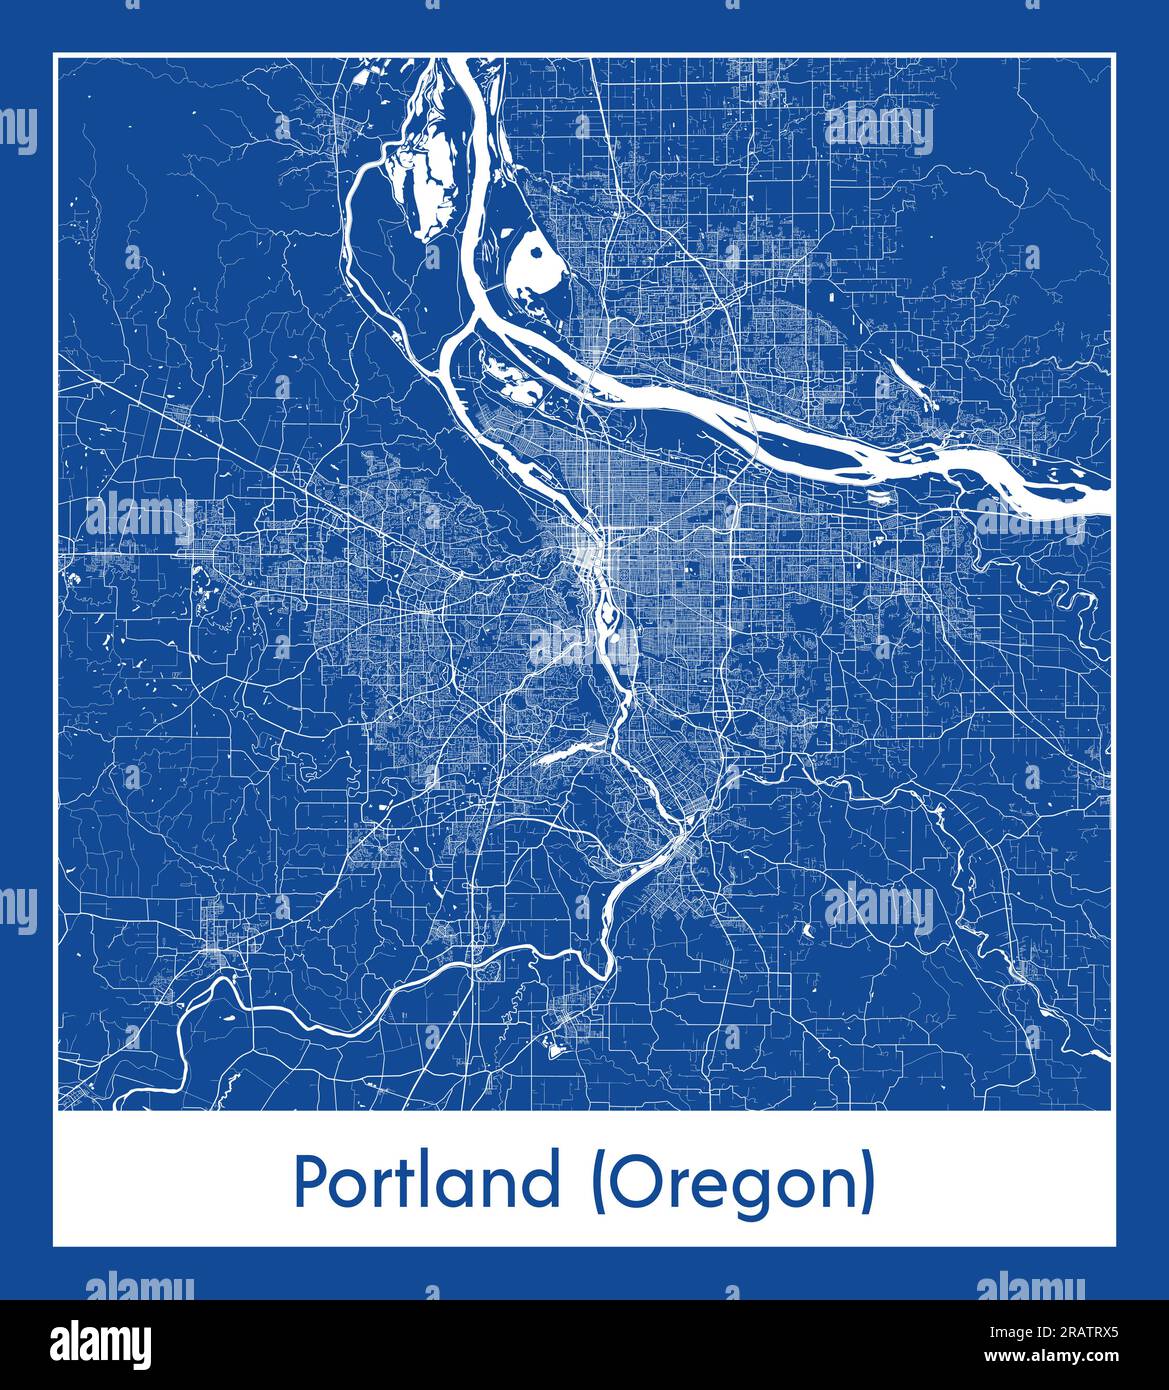 Portland Oregon United States North America City map blue print vector illustration Stock Vector